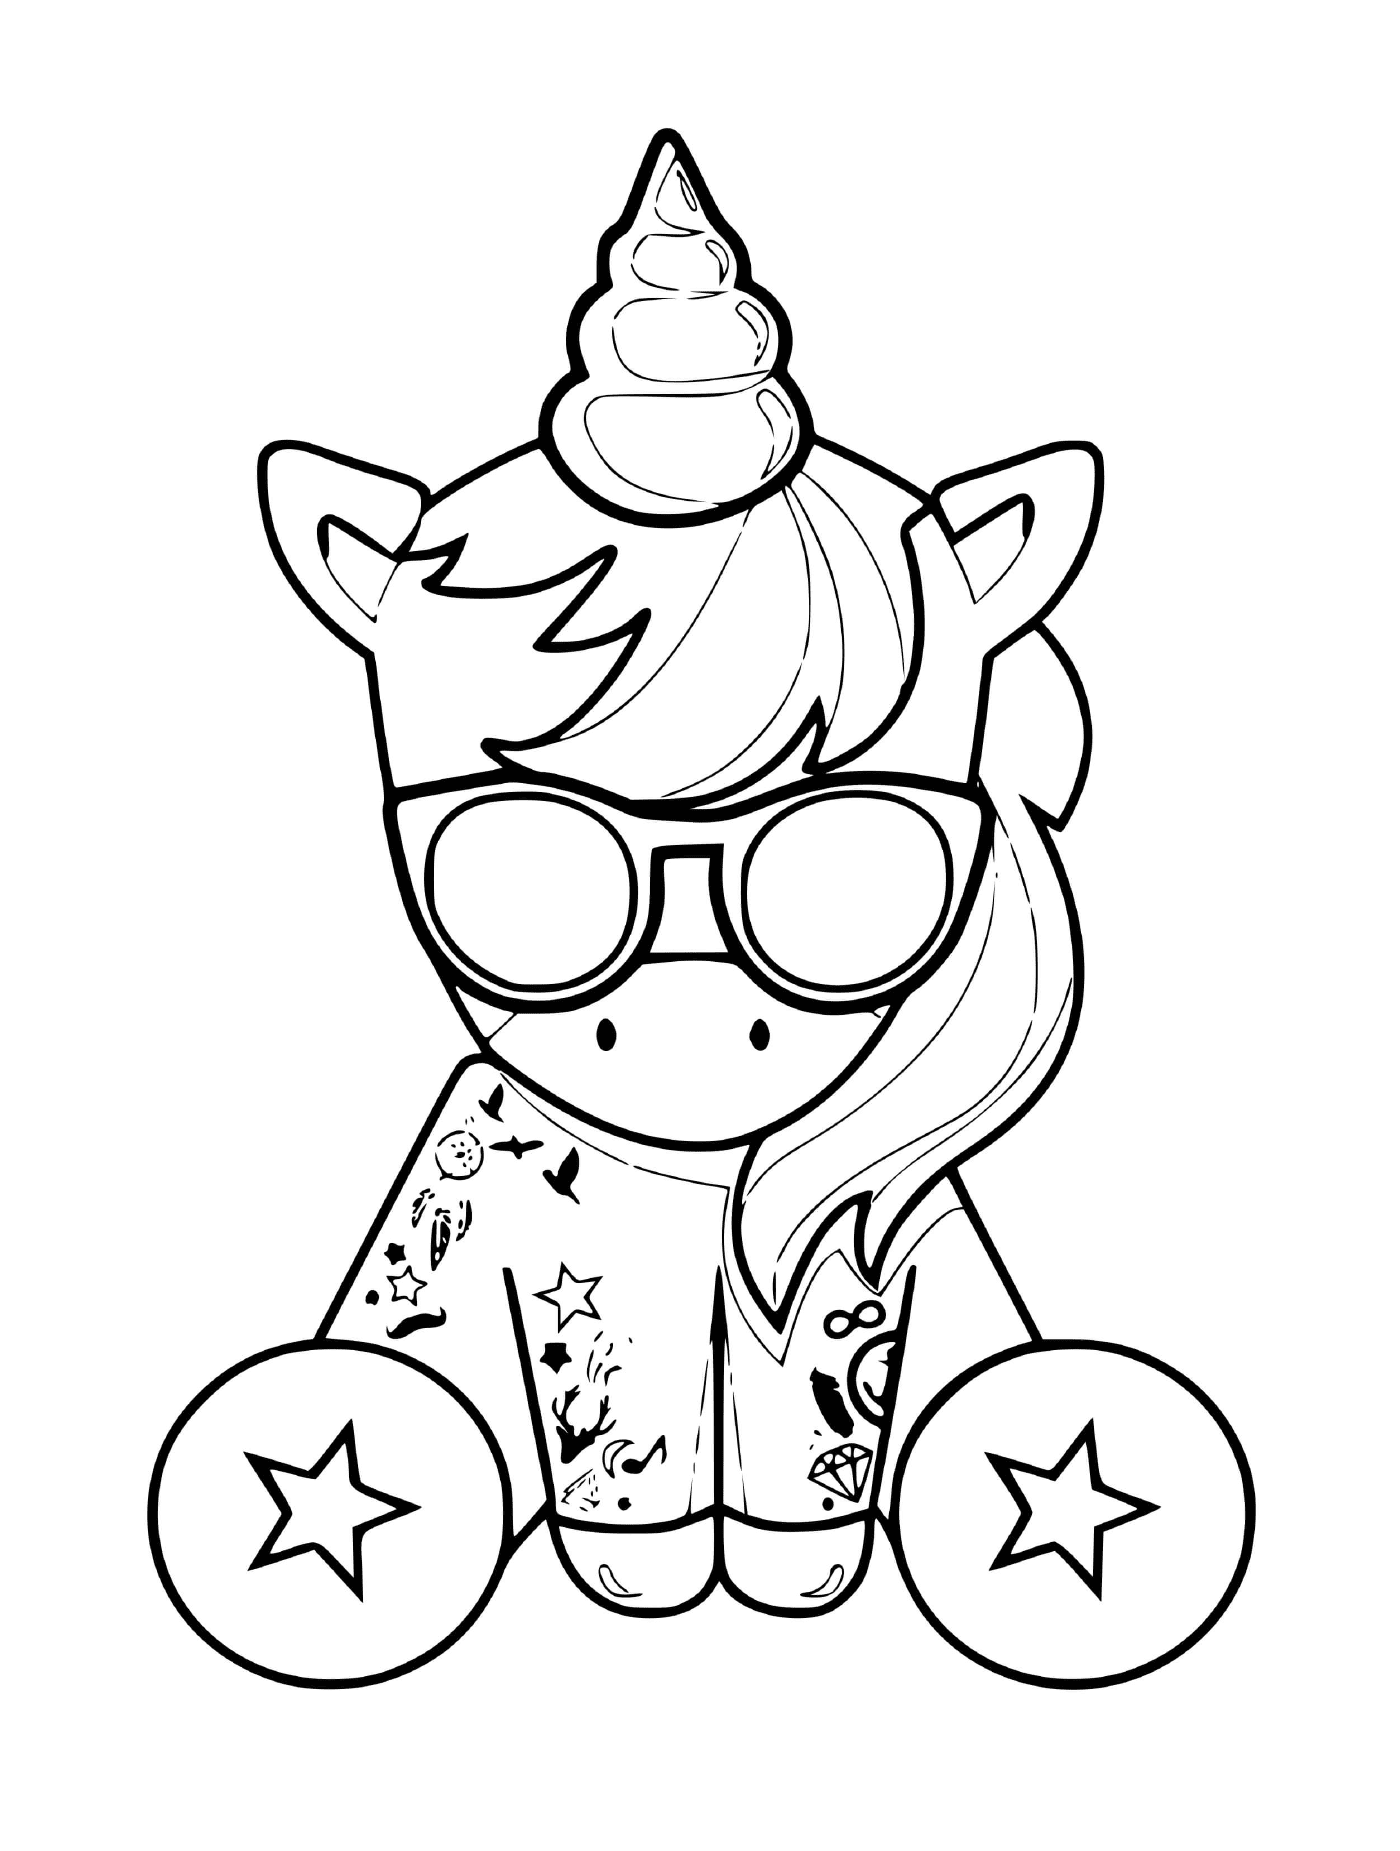  unicorn kawaii with glasses and tattoos 